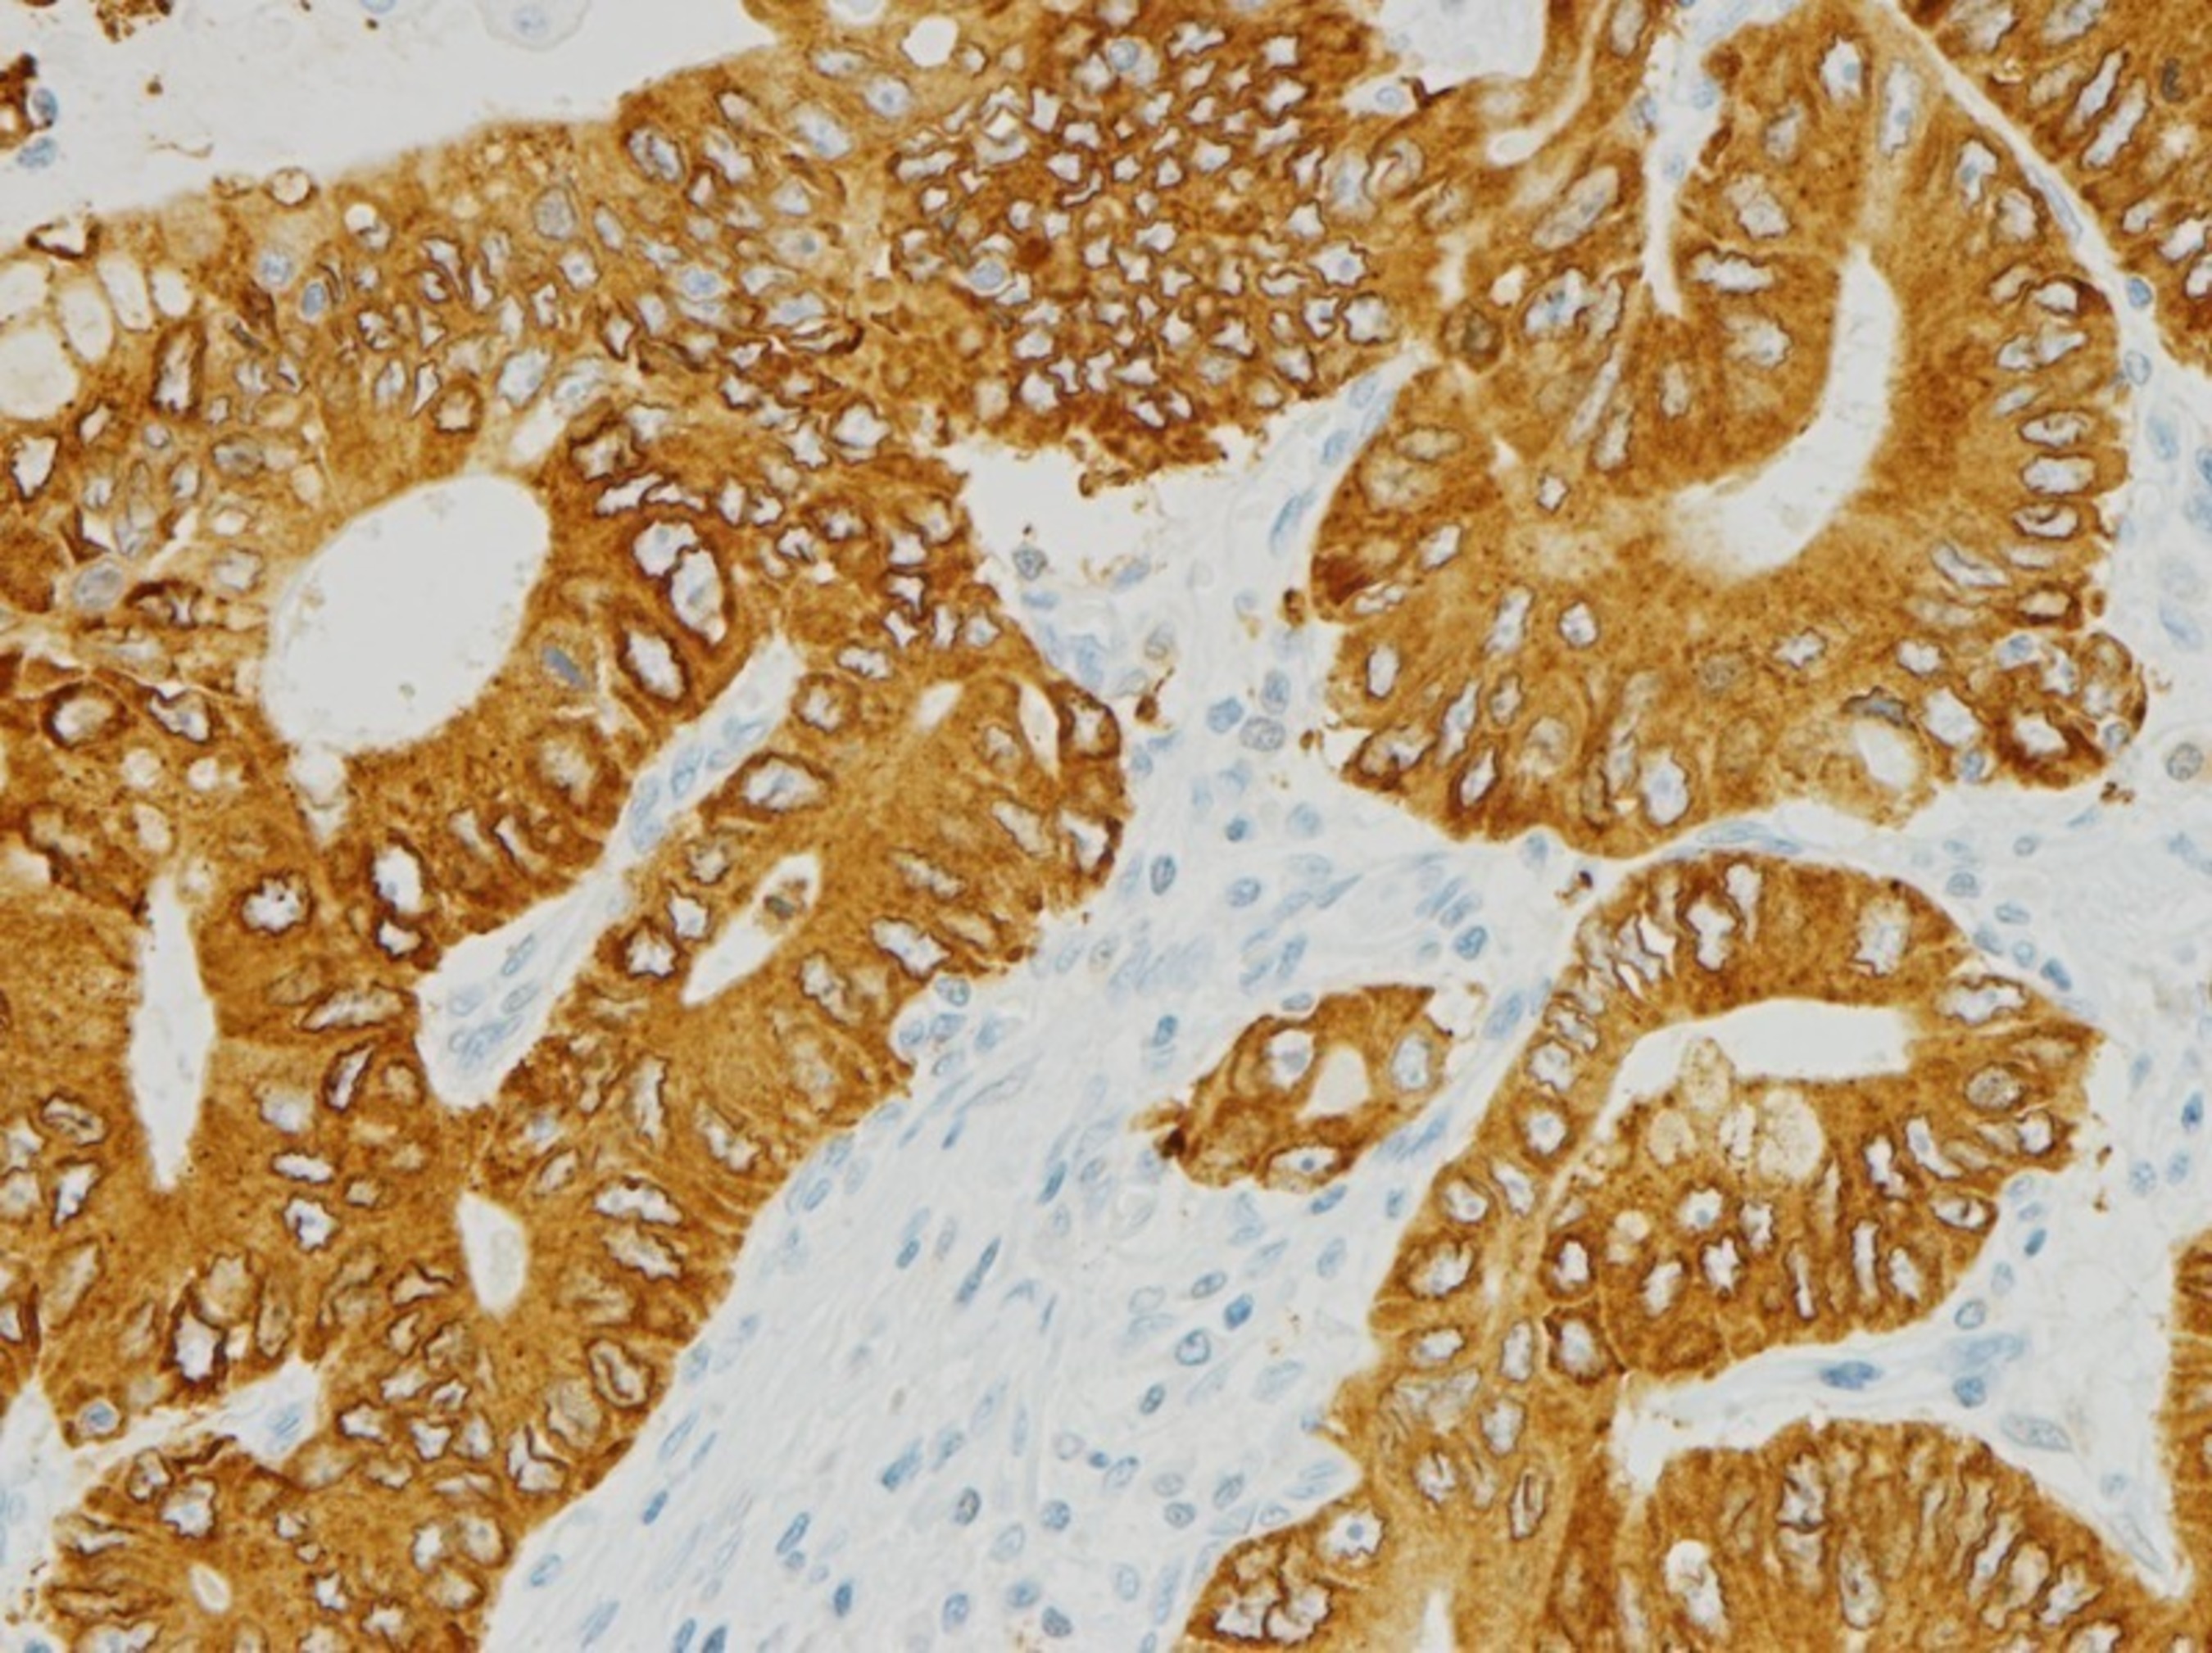 FGFR2 (fibroblast growth factor receptor 2) Gastric tissue at 20x stained on a VENTANA BenchMark XT (PRNewsFoto/Ventana Medical Systems, Inc.)